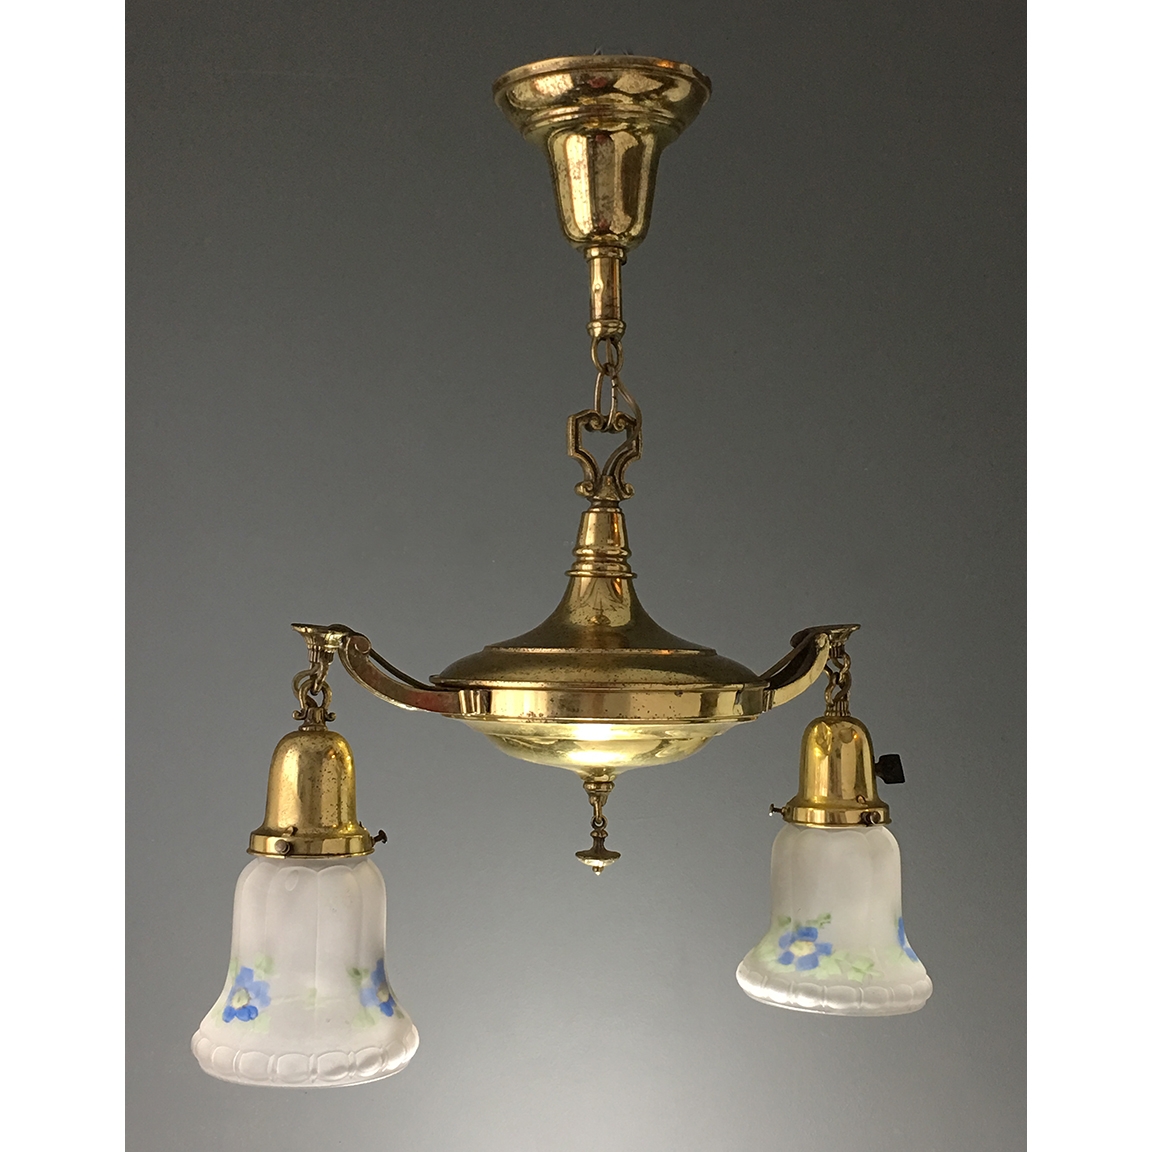 Vintage Brass Ceiling Light Fixture